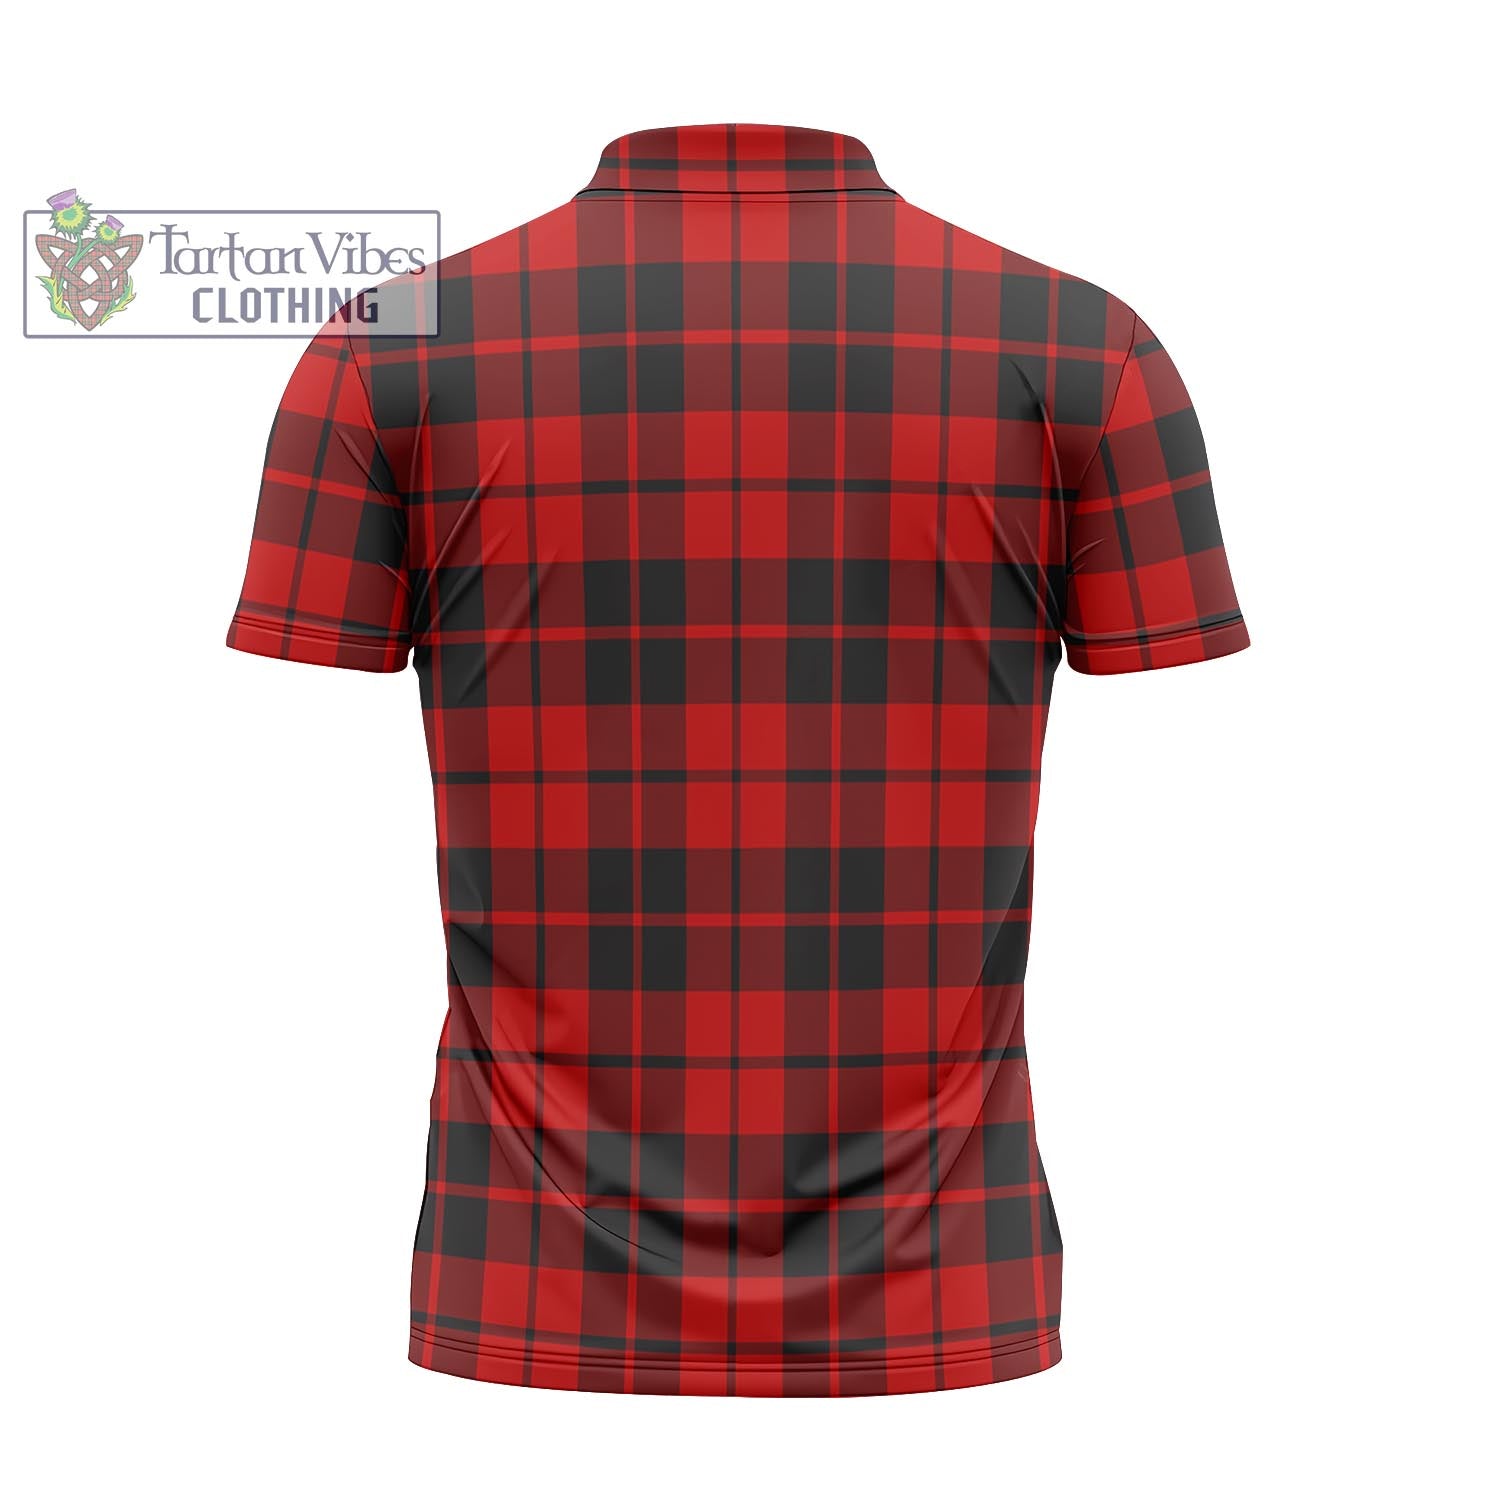 Tartan Vibes Clothing Hogg Tartan Zipper Polo Shirt with Family Crest